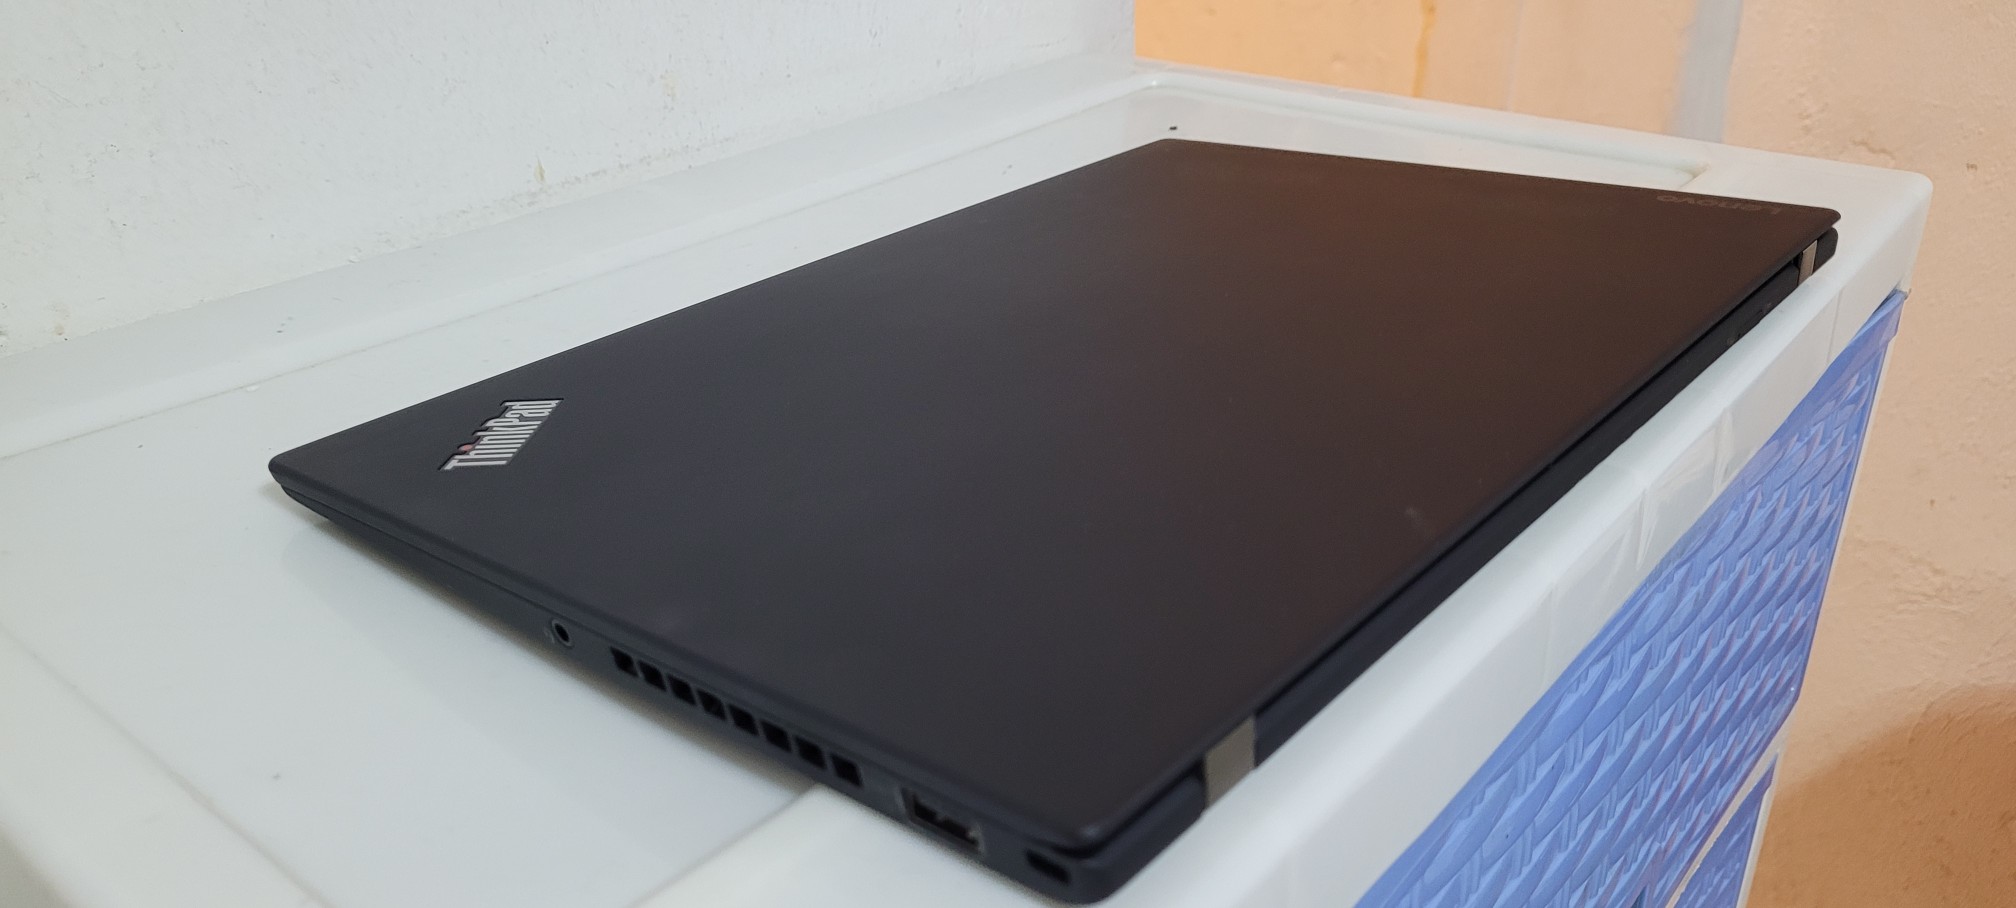 computadoras y laptops - Lenovo T480s 14 Pulg Core i5 8va Gen Ram 16gb ddr4 Disco 256gb Video 8gb 2